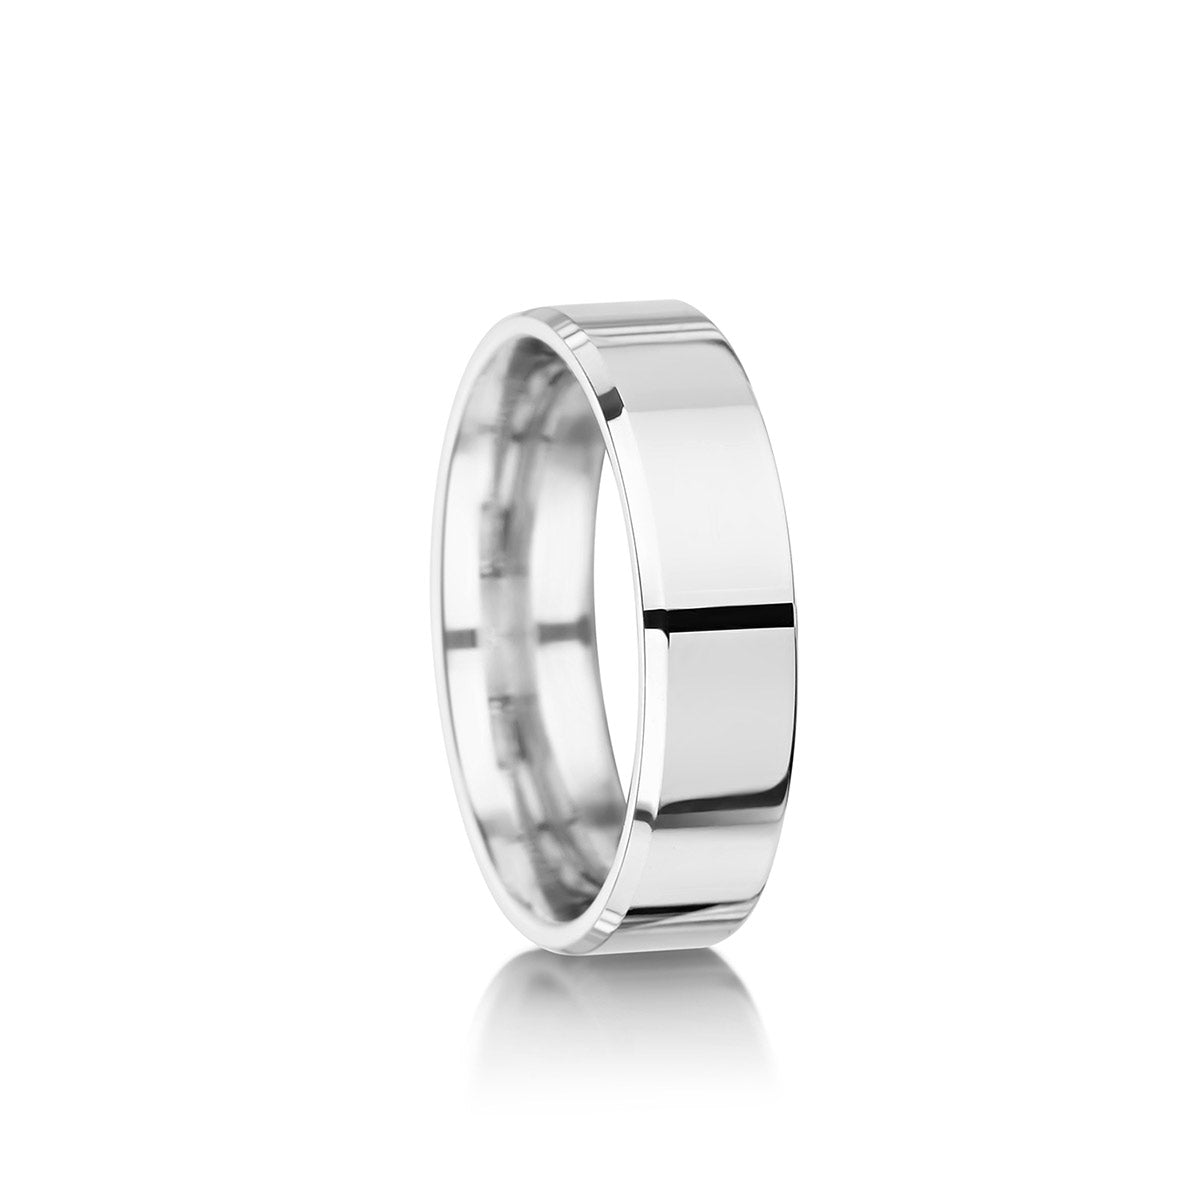 5mm Gents Polished wedding Ring With Polished finish – MWR12